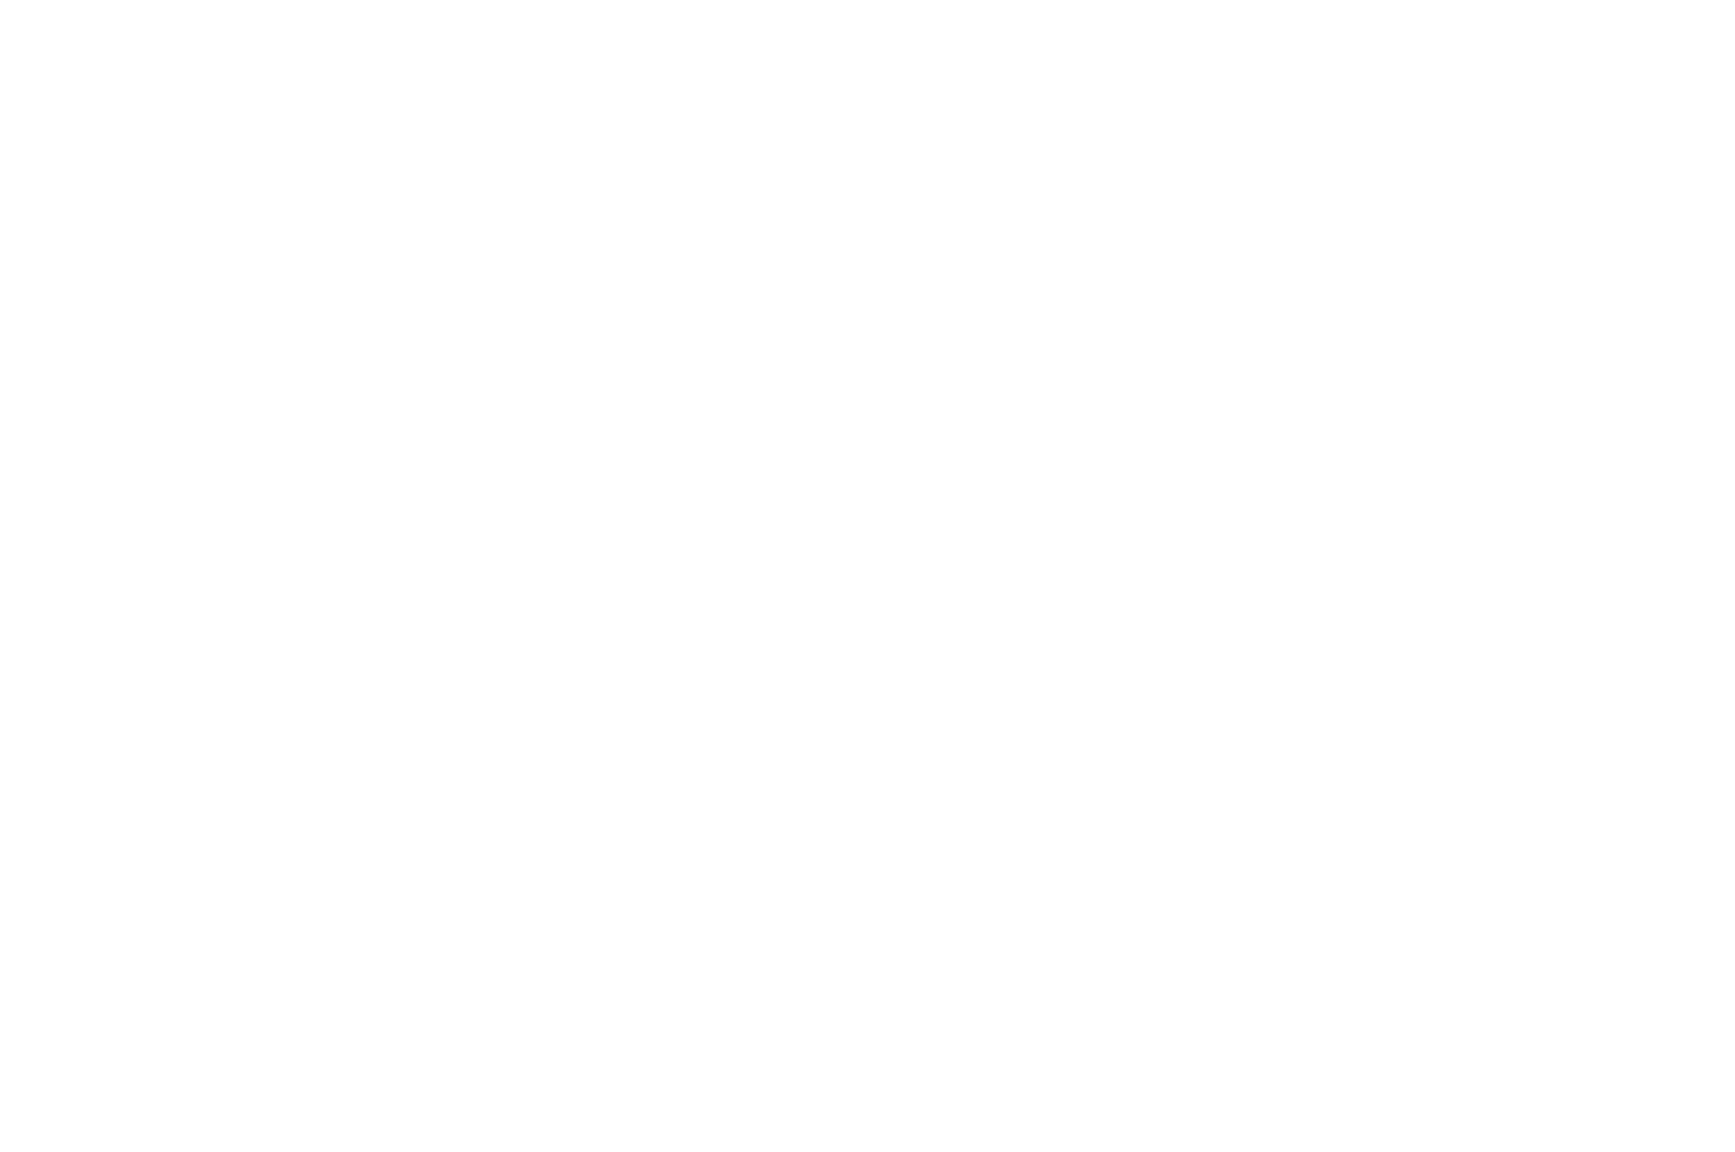 NOMINATED - BEST SHORT FILM  - LA CINEFEST 2016.png